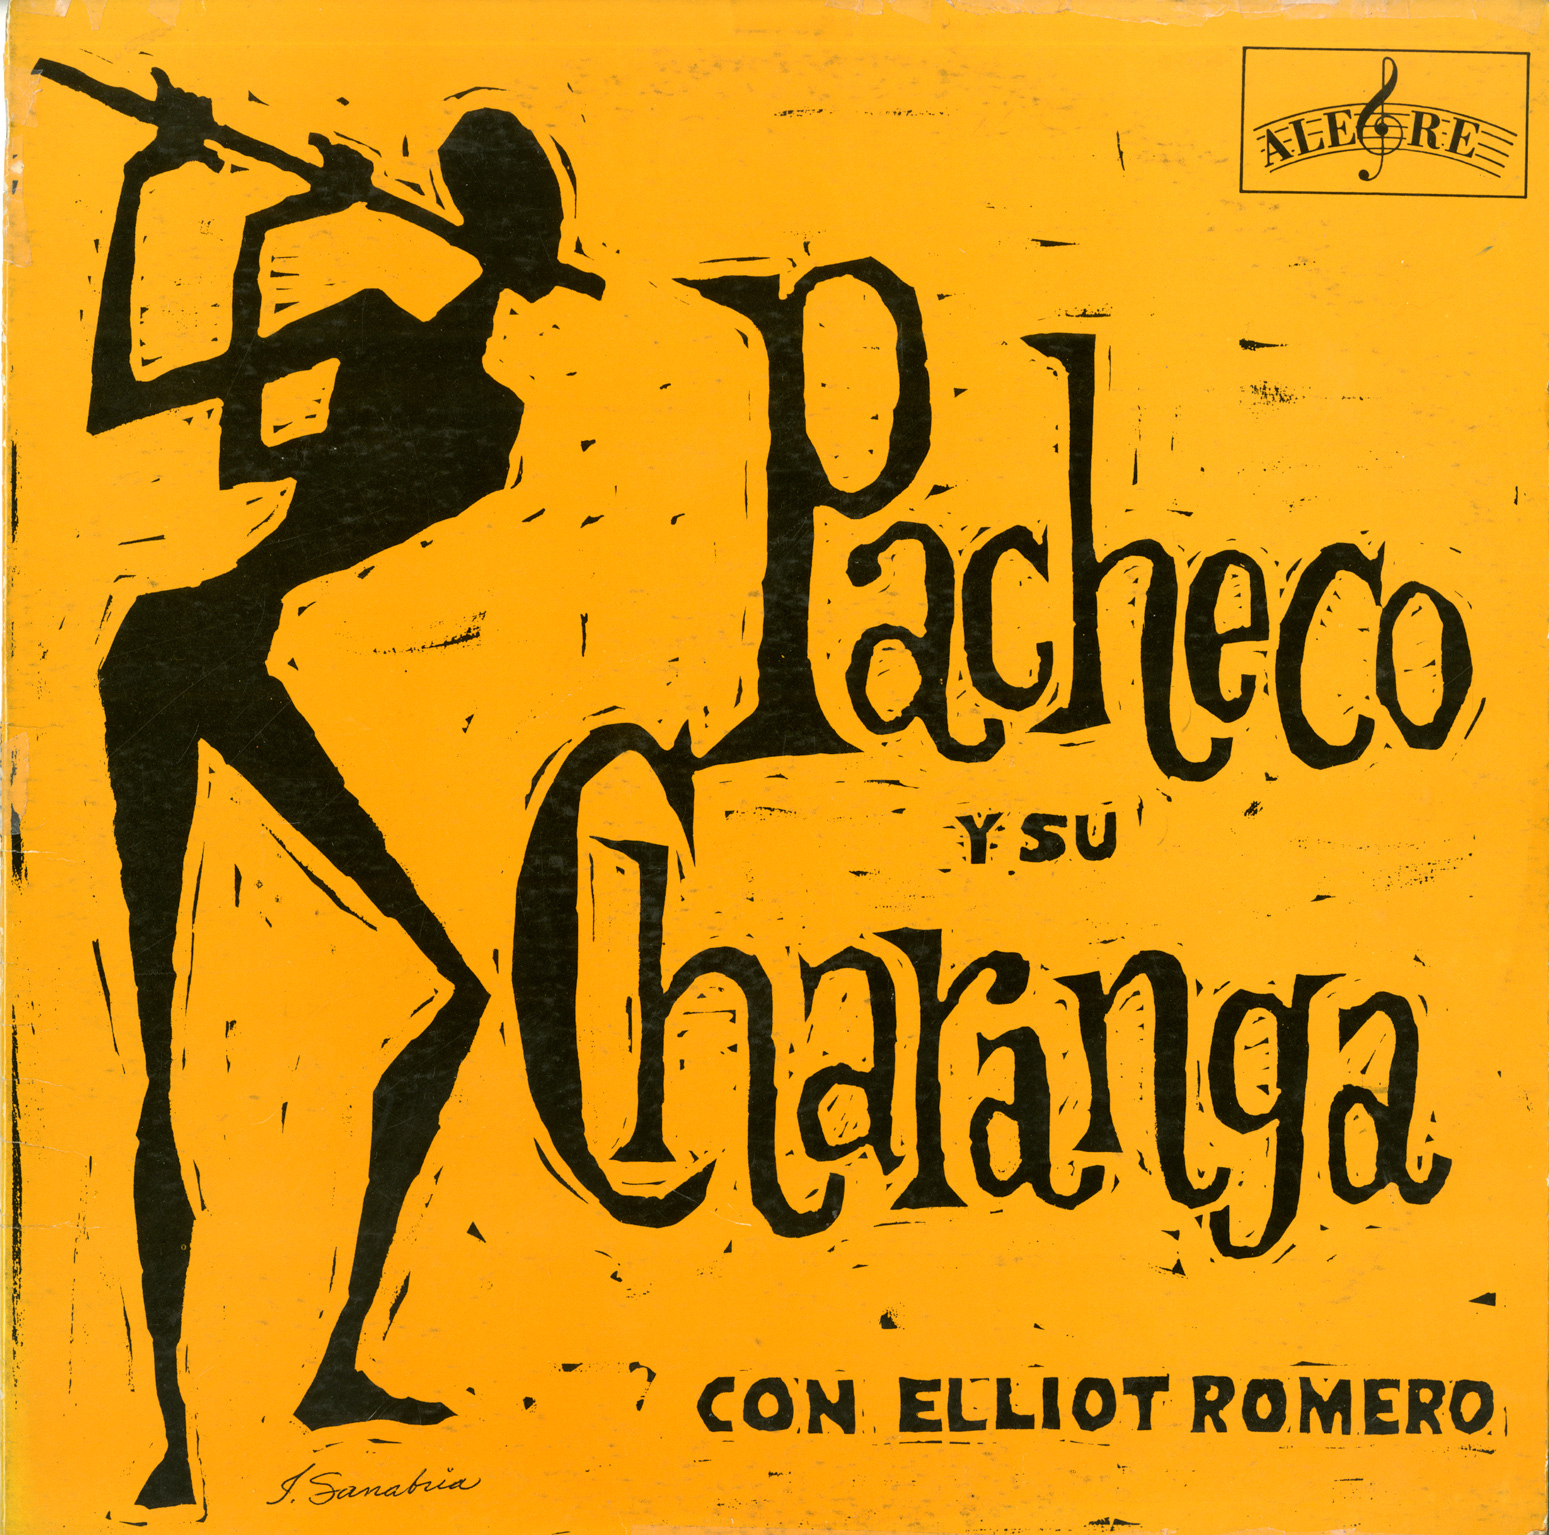 Pacheco y su Charanga con Elliot Romero